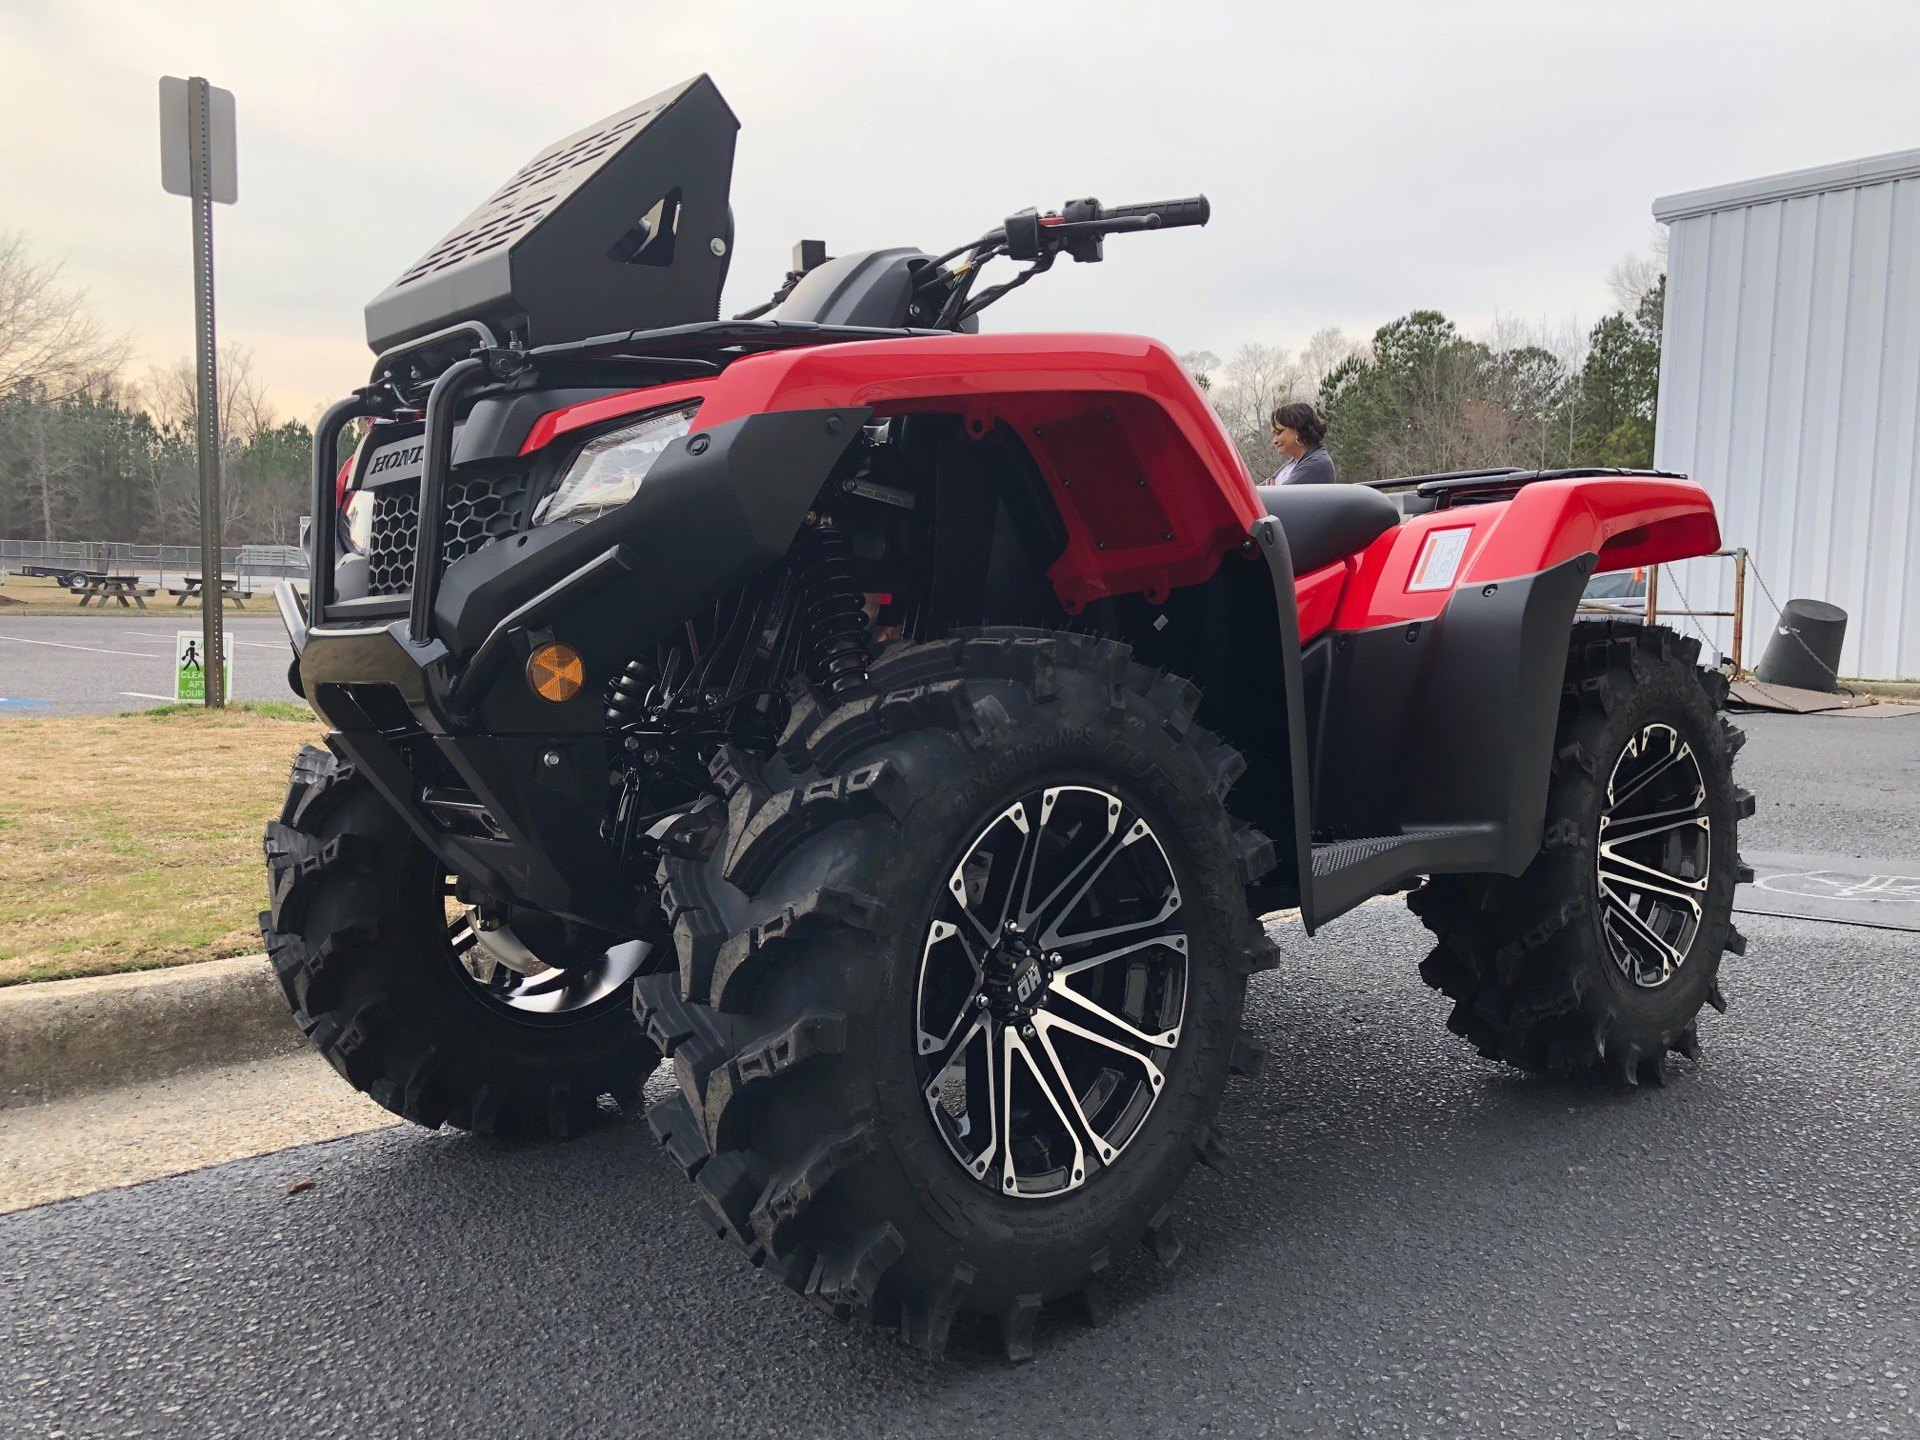 New 2020 Honda FourTrax Rancher 4x4 ATVs in Greenville, NC Stock